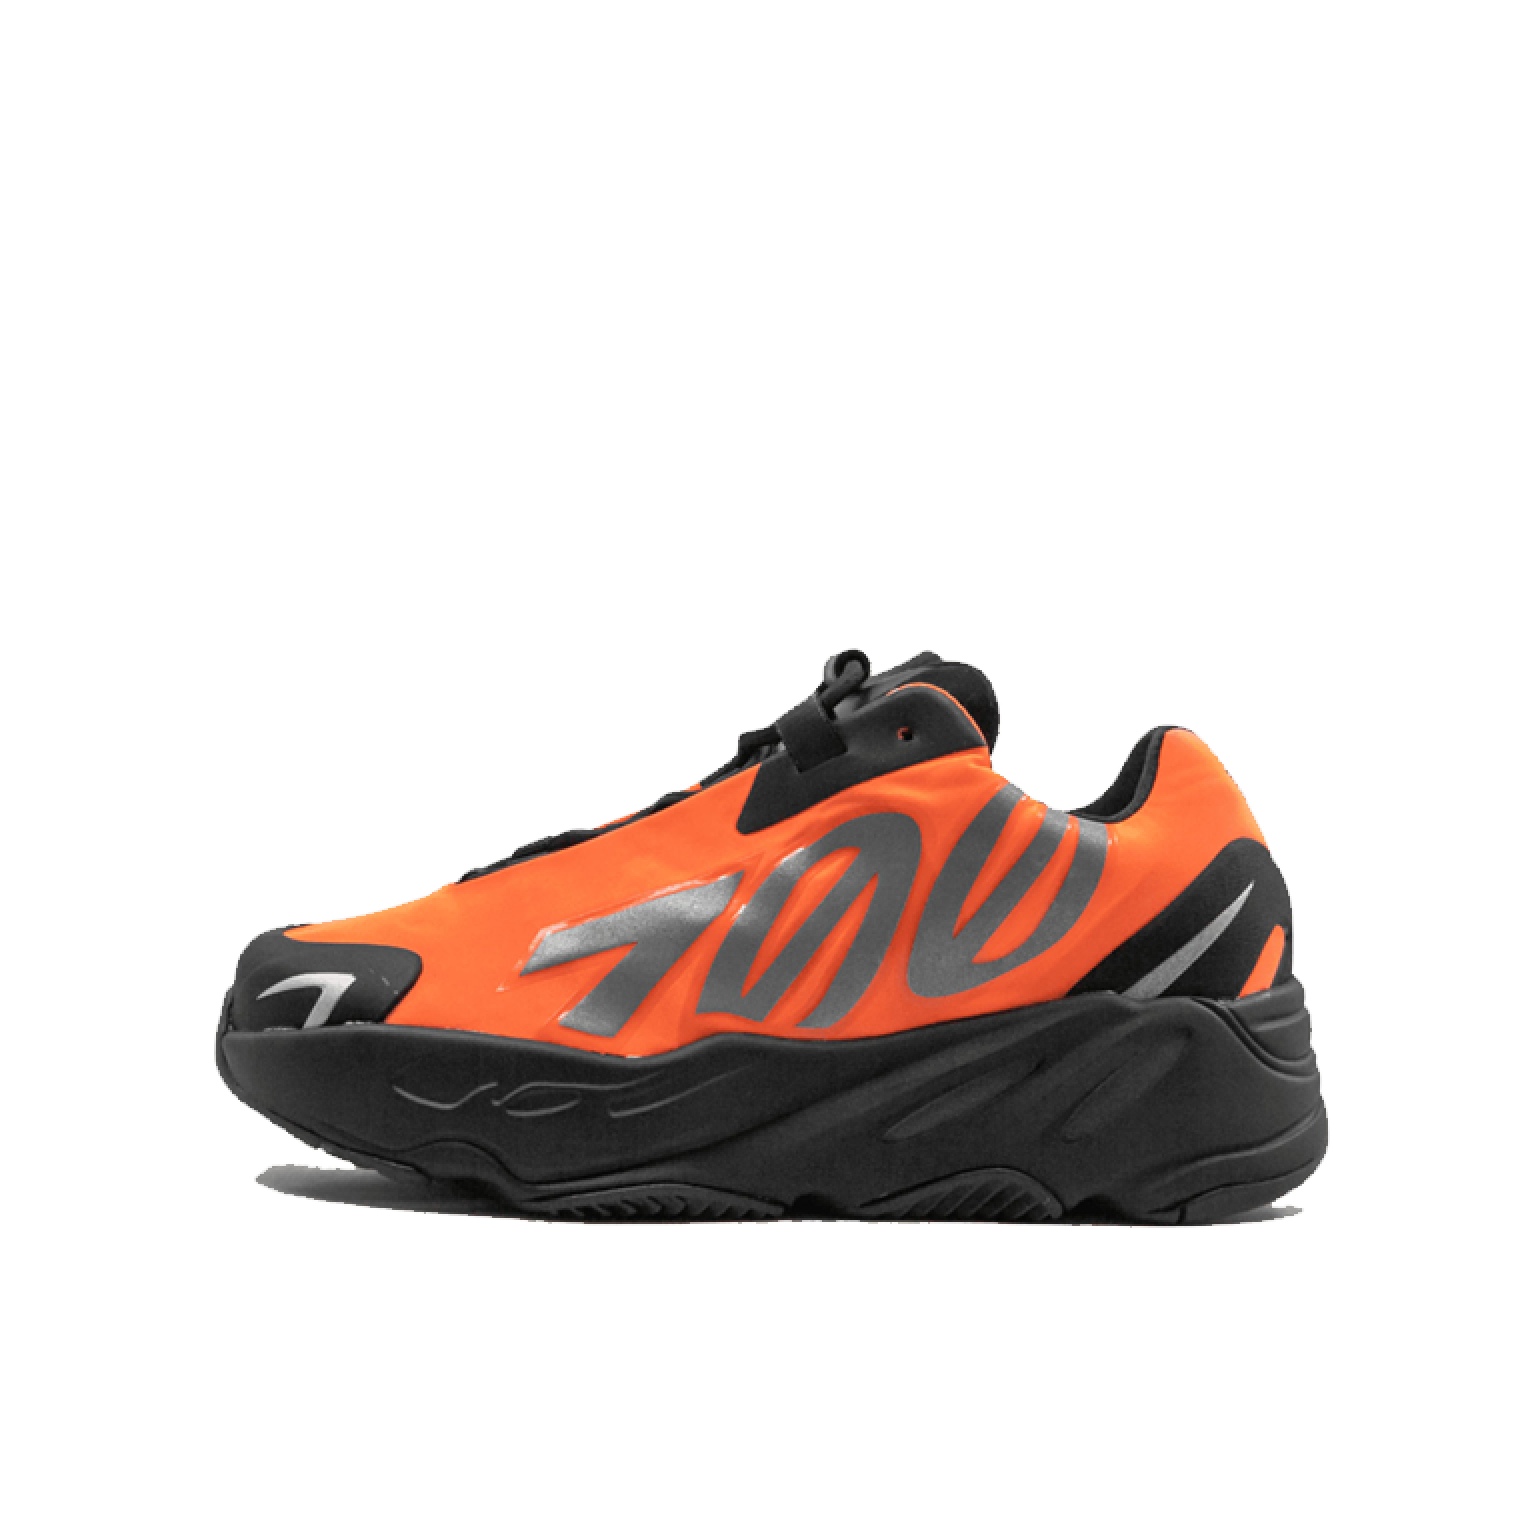 Adidas Yeezy Boost 700 MNVN Orange (Kids) (33.5 EU)